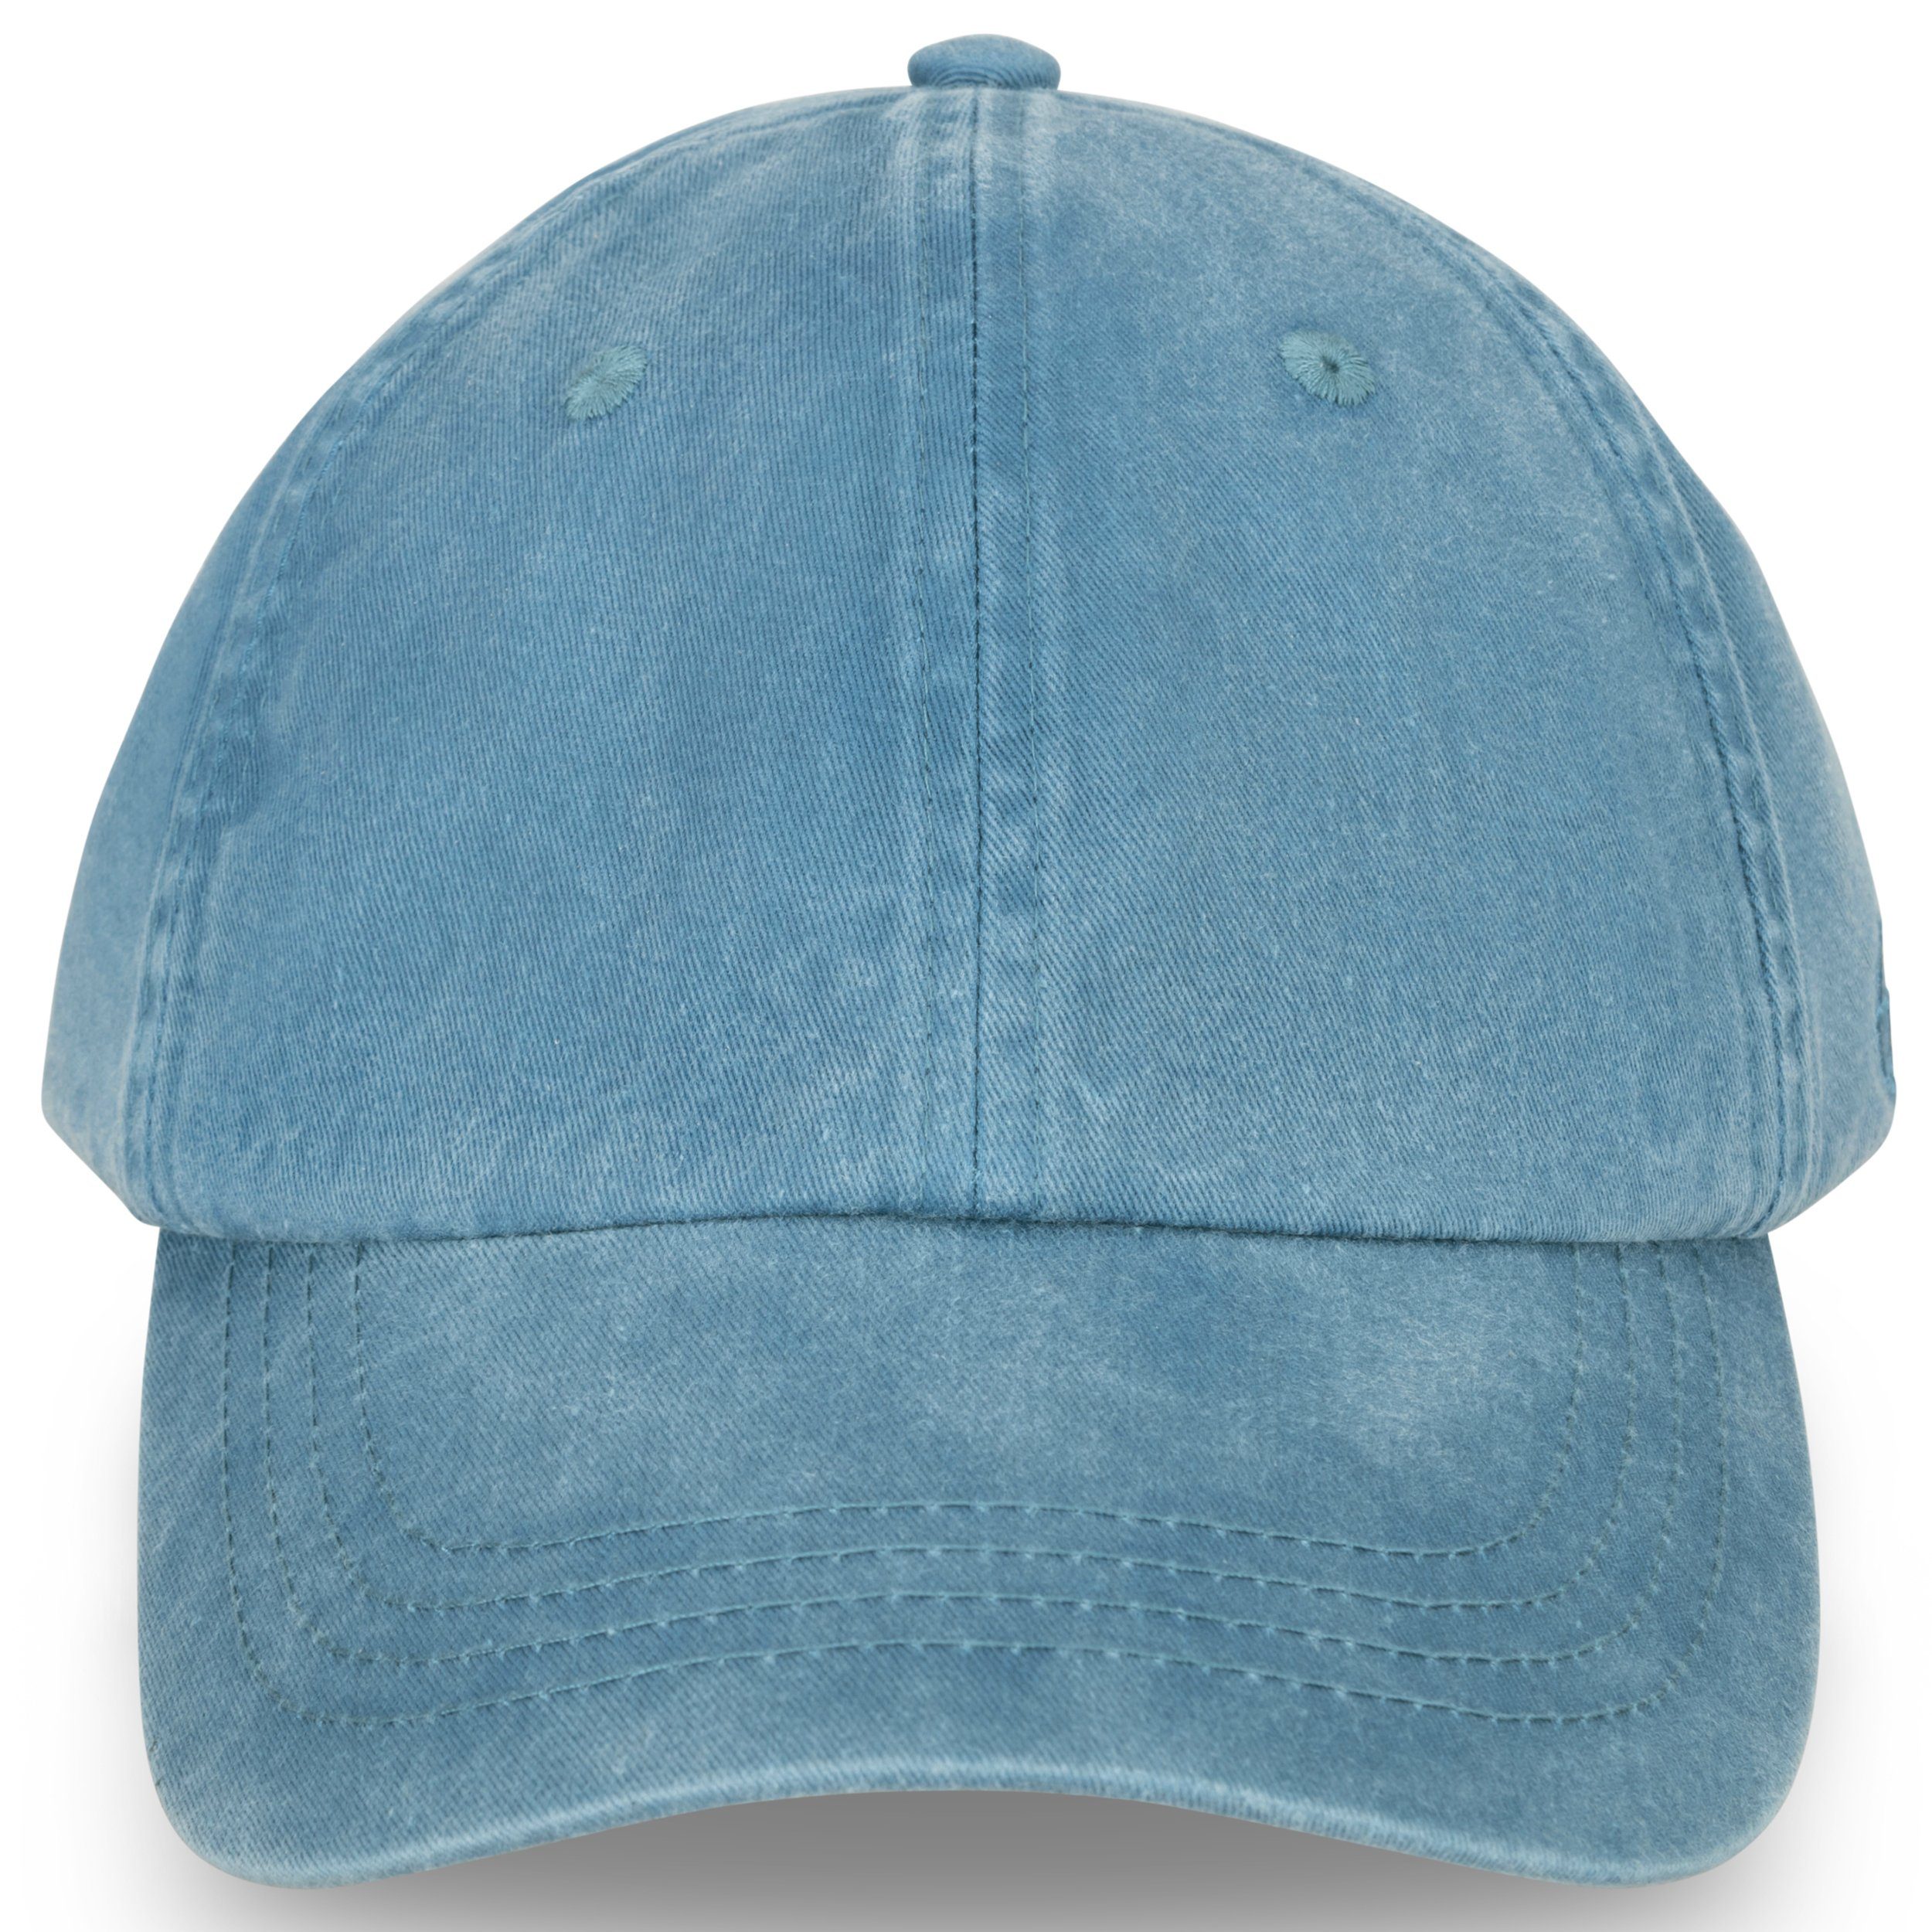 Johnny Urban Snapback Cap Dave Cap Herren Damen Teenager Basecap Größenverstellbar, Unisex blau | Snapback Caps